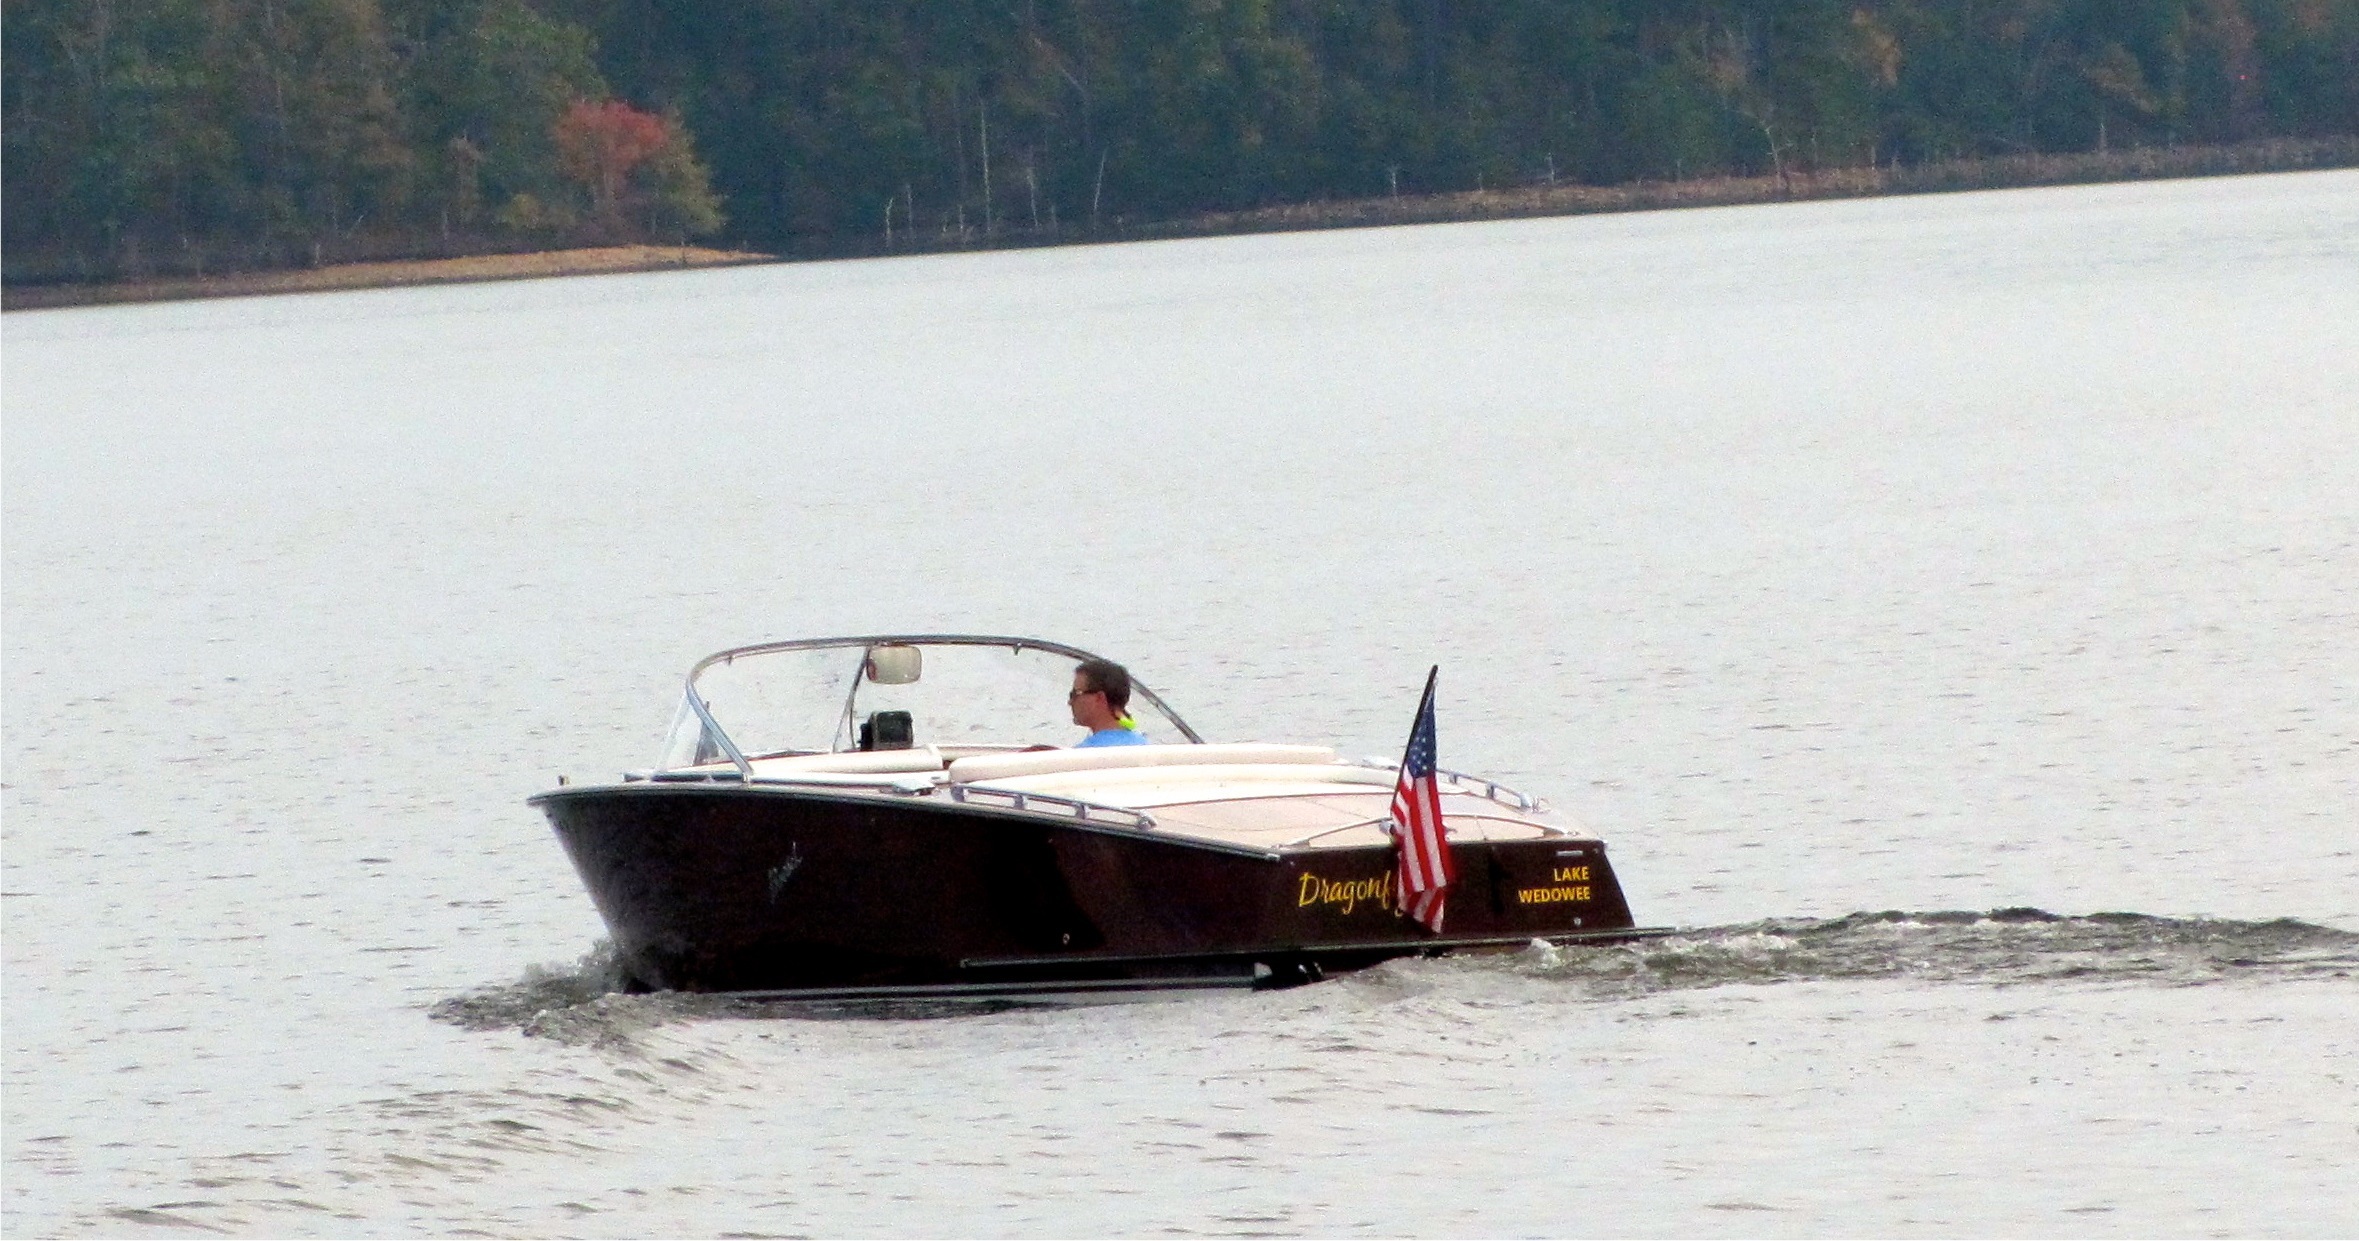 v70i karo carbon with gennaker, radio controlled yacht